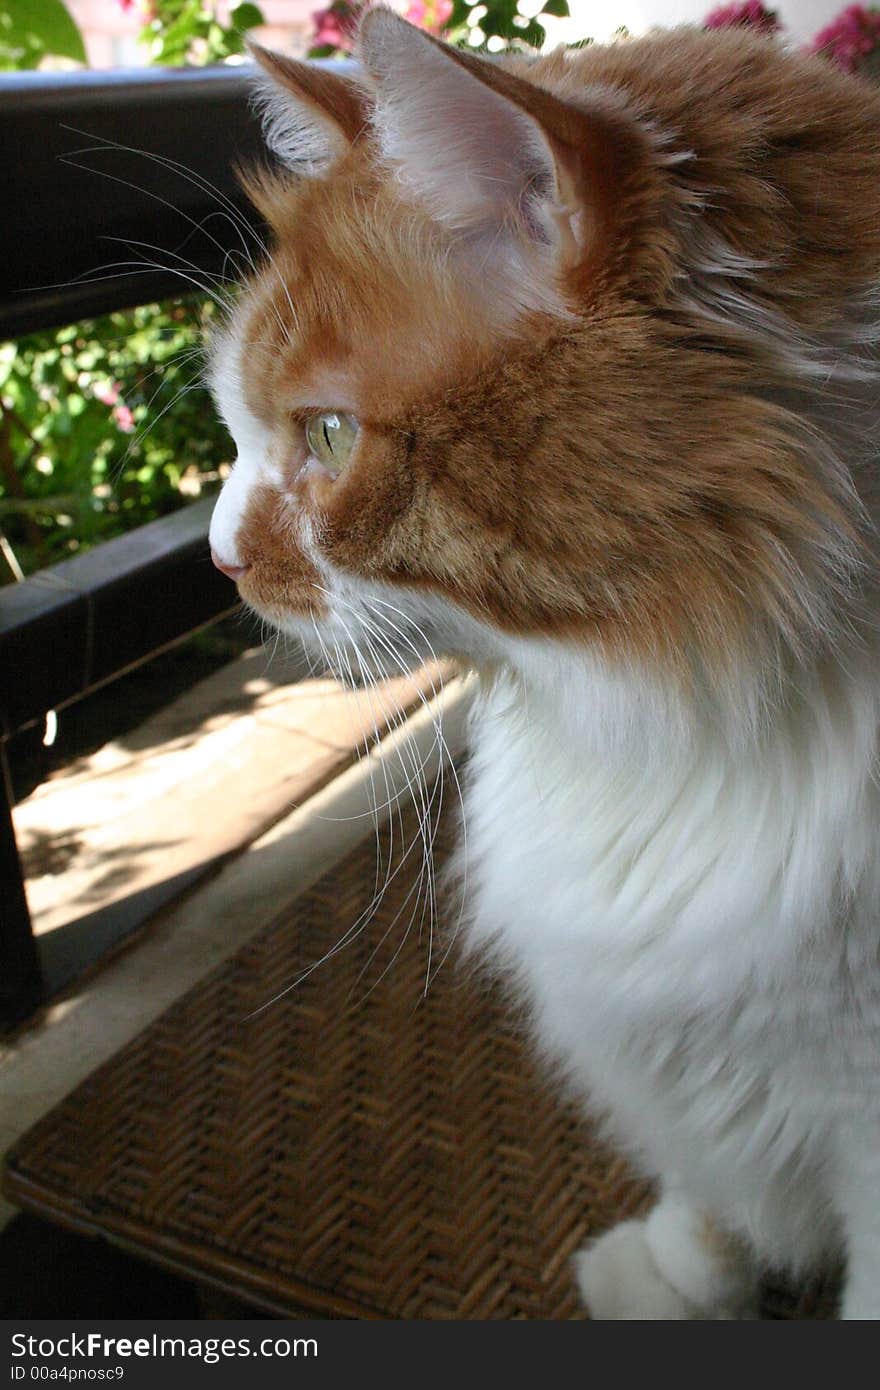 Sweet cat enjoying the outdoors